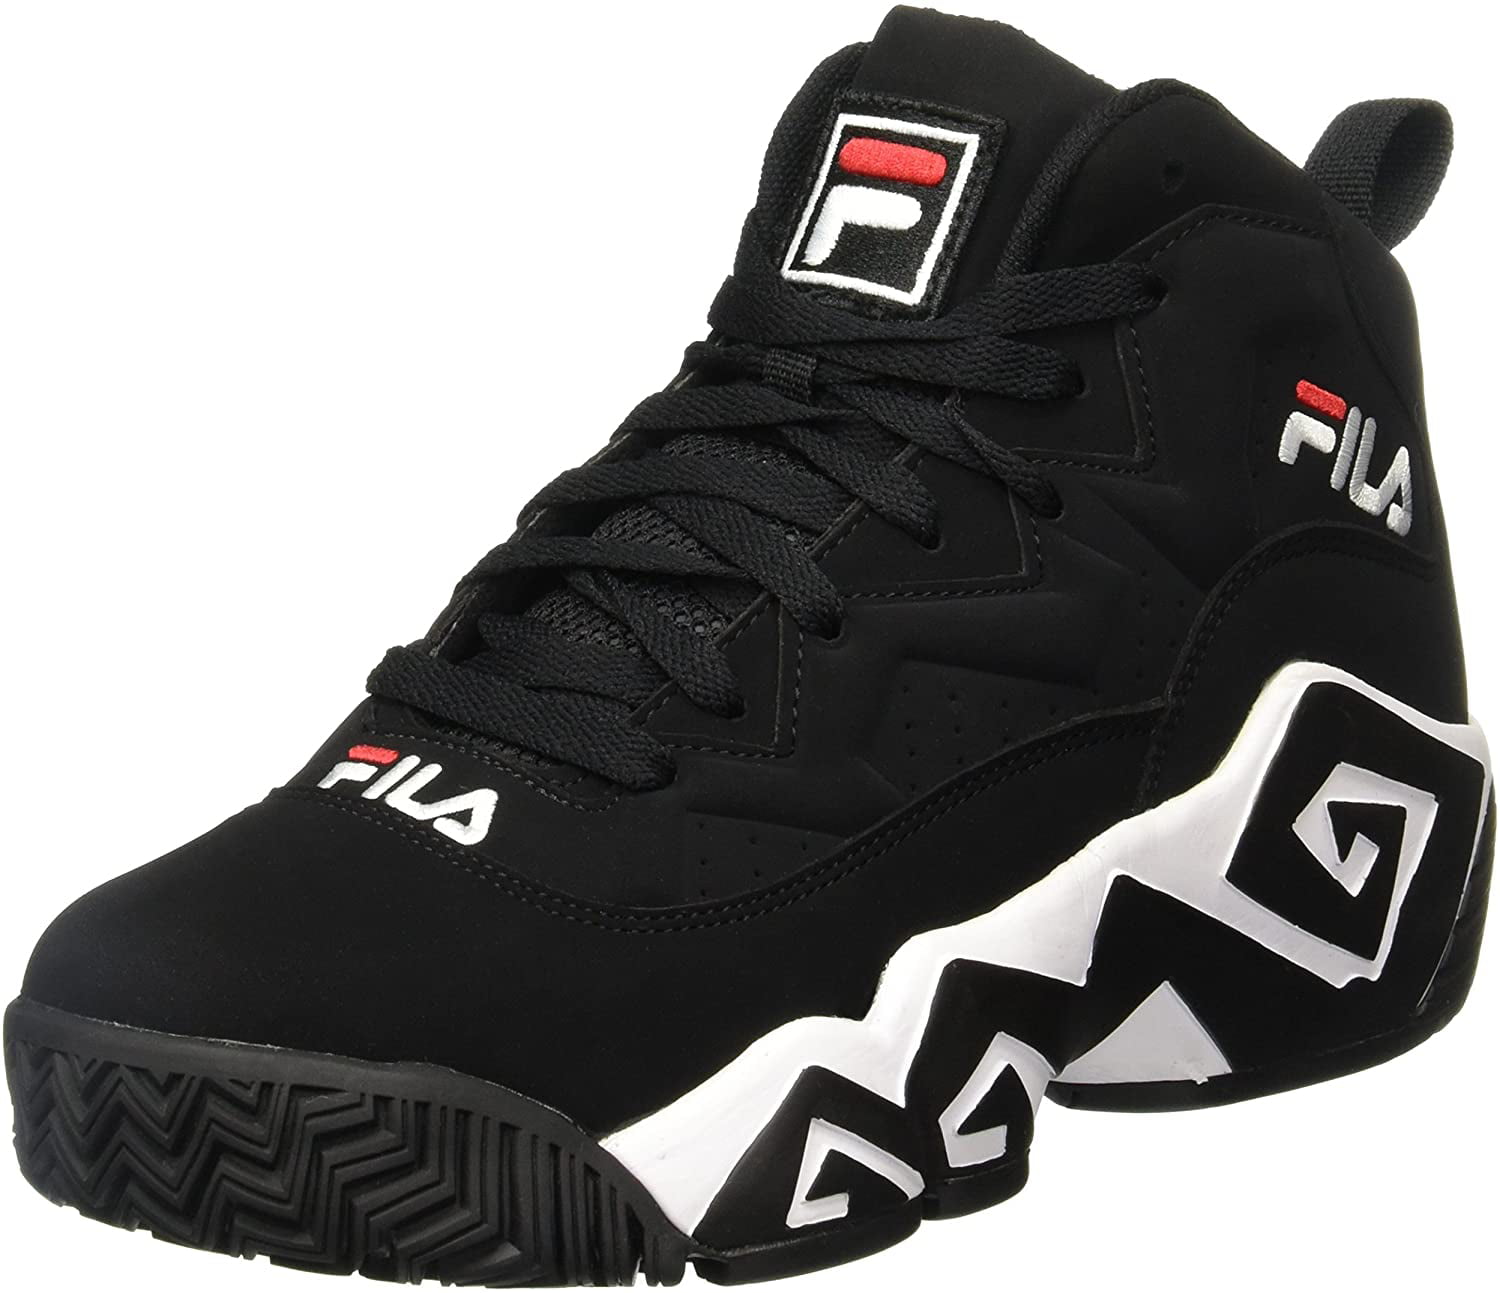 Fila Men's MB Fashion Sneaker, Black/White Red, 10 M US | Walmart Canada